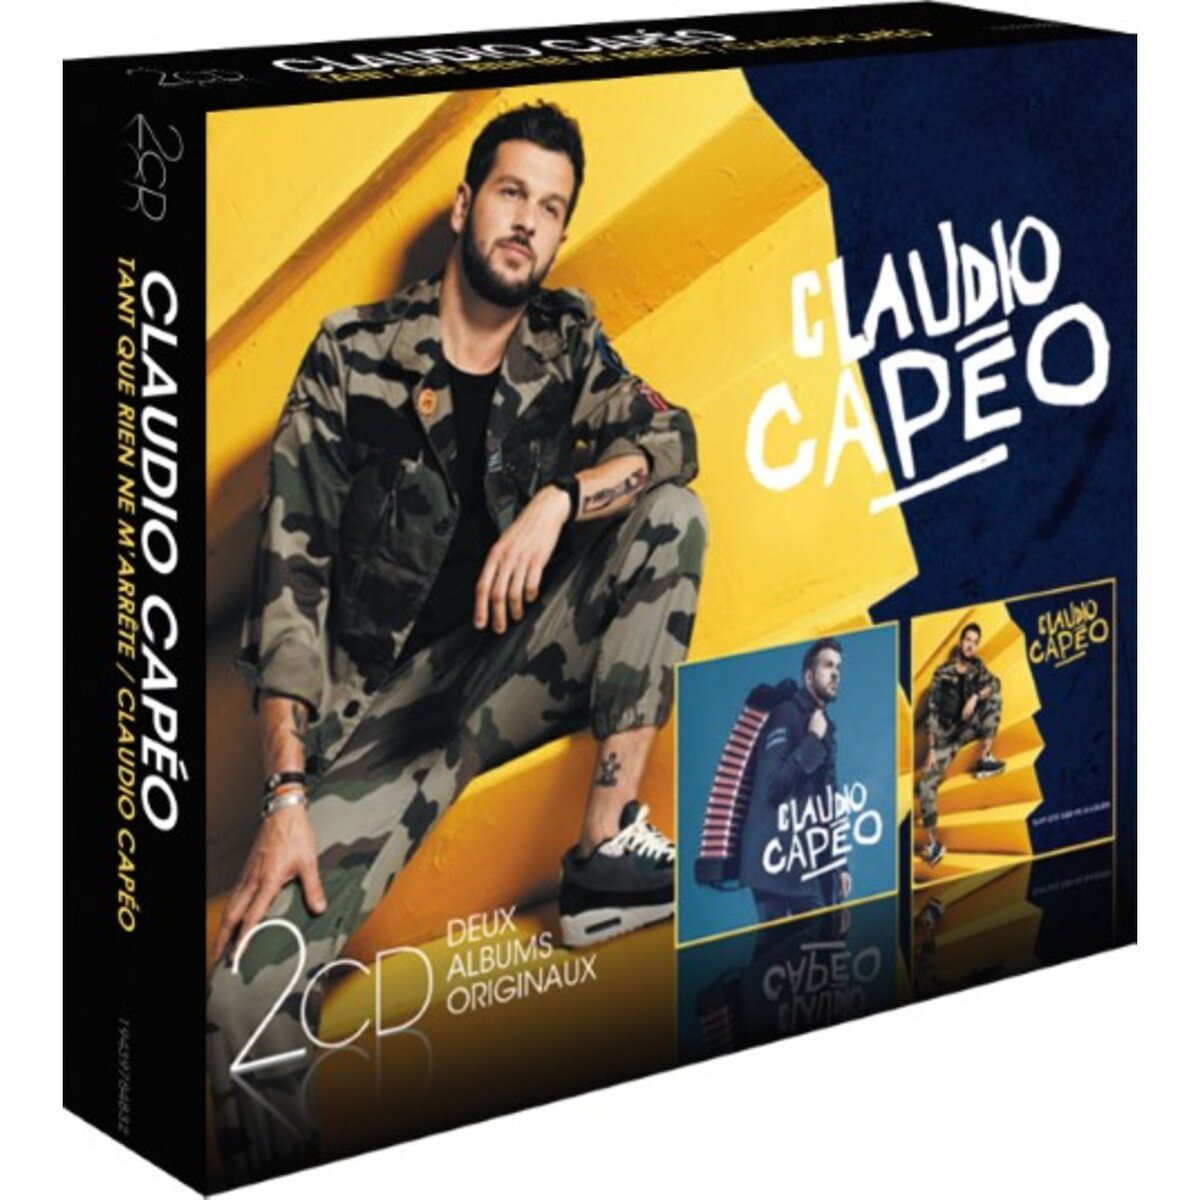 CAPEO CLAUDIO 2 CD CLAUDIO CAPEO/TANT QUE RIEN N